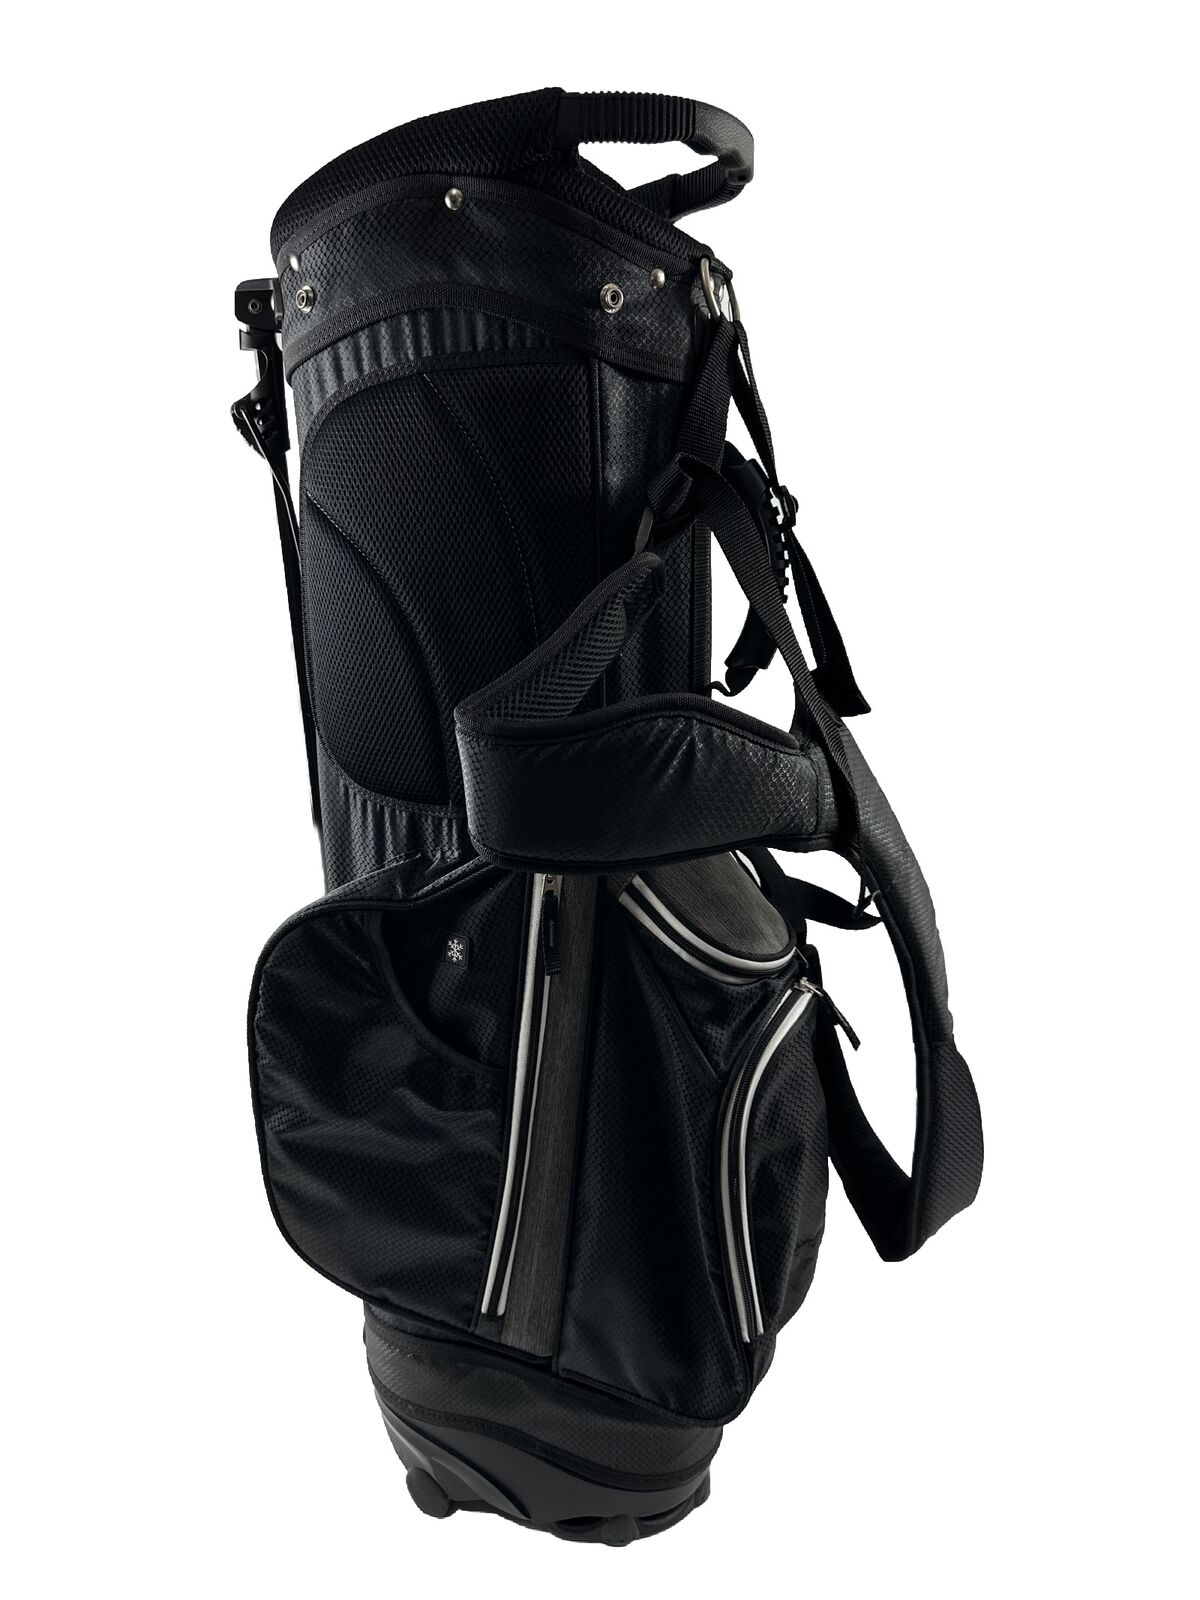 RJ Golf Sports Golf Bag RJ Golf Stand Bag 7-Way  Black/grey/white VGC